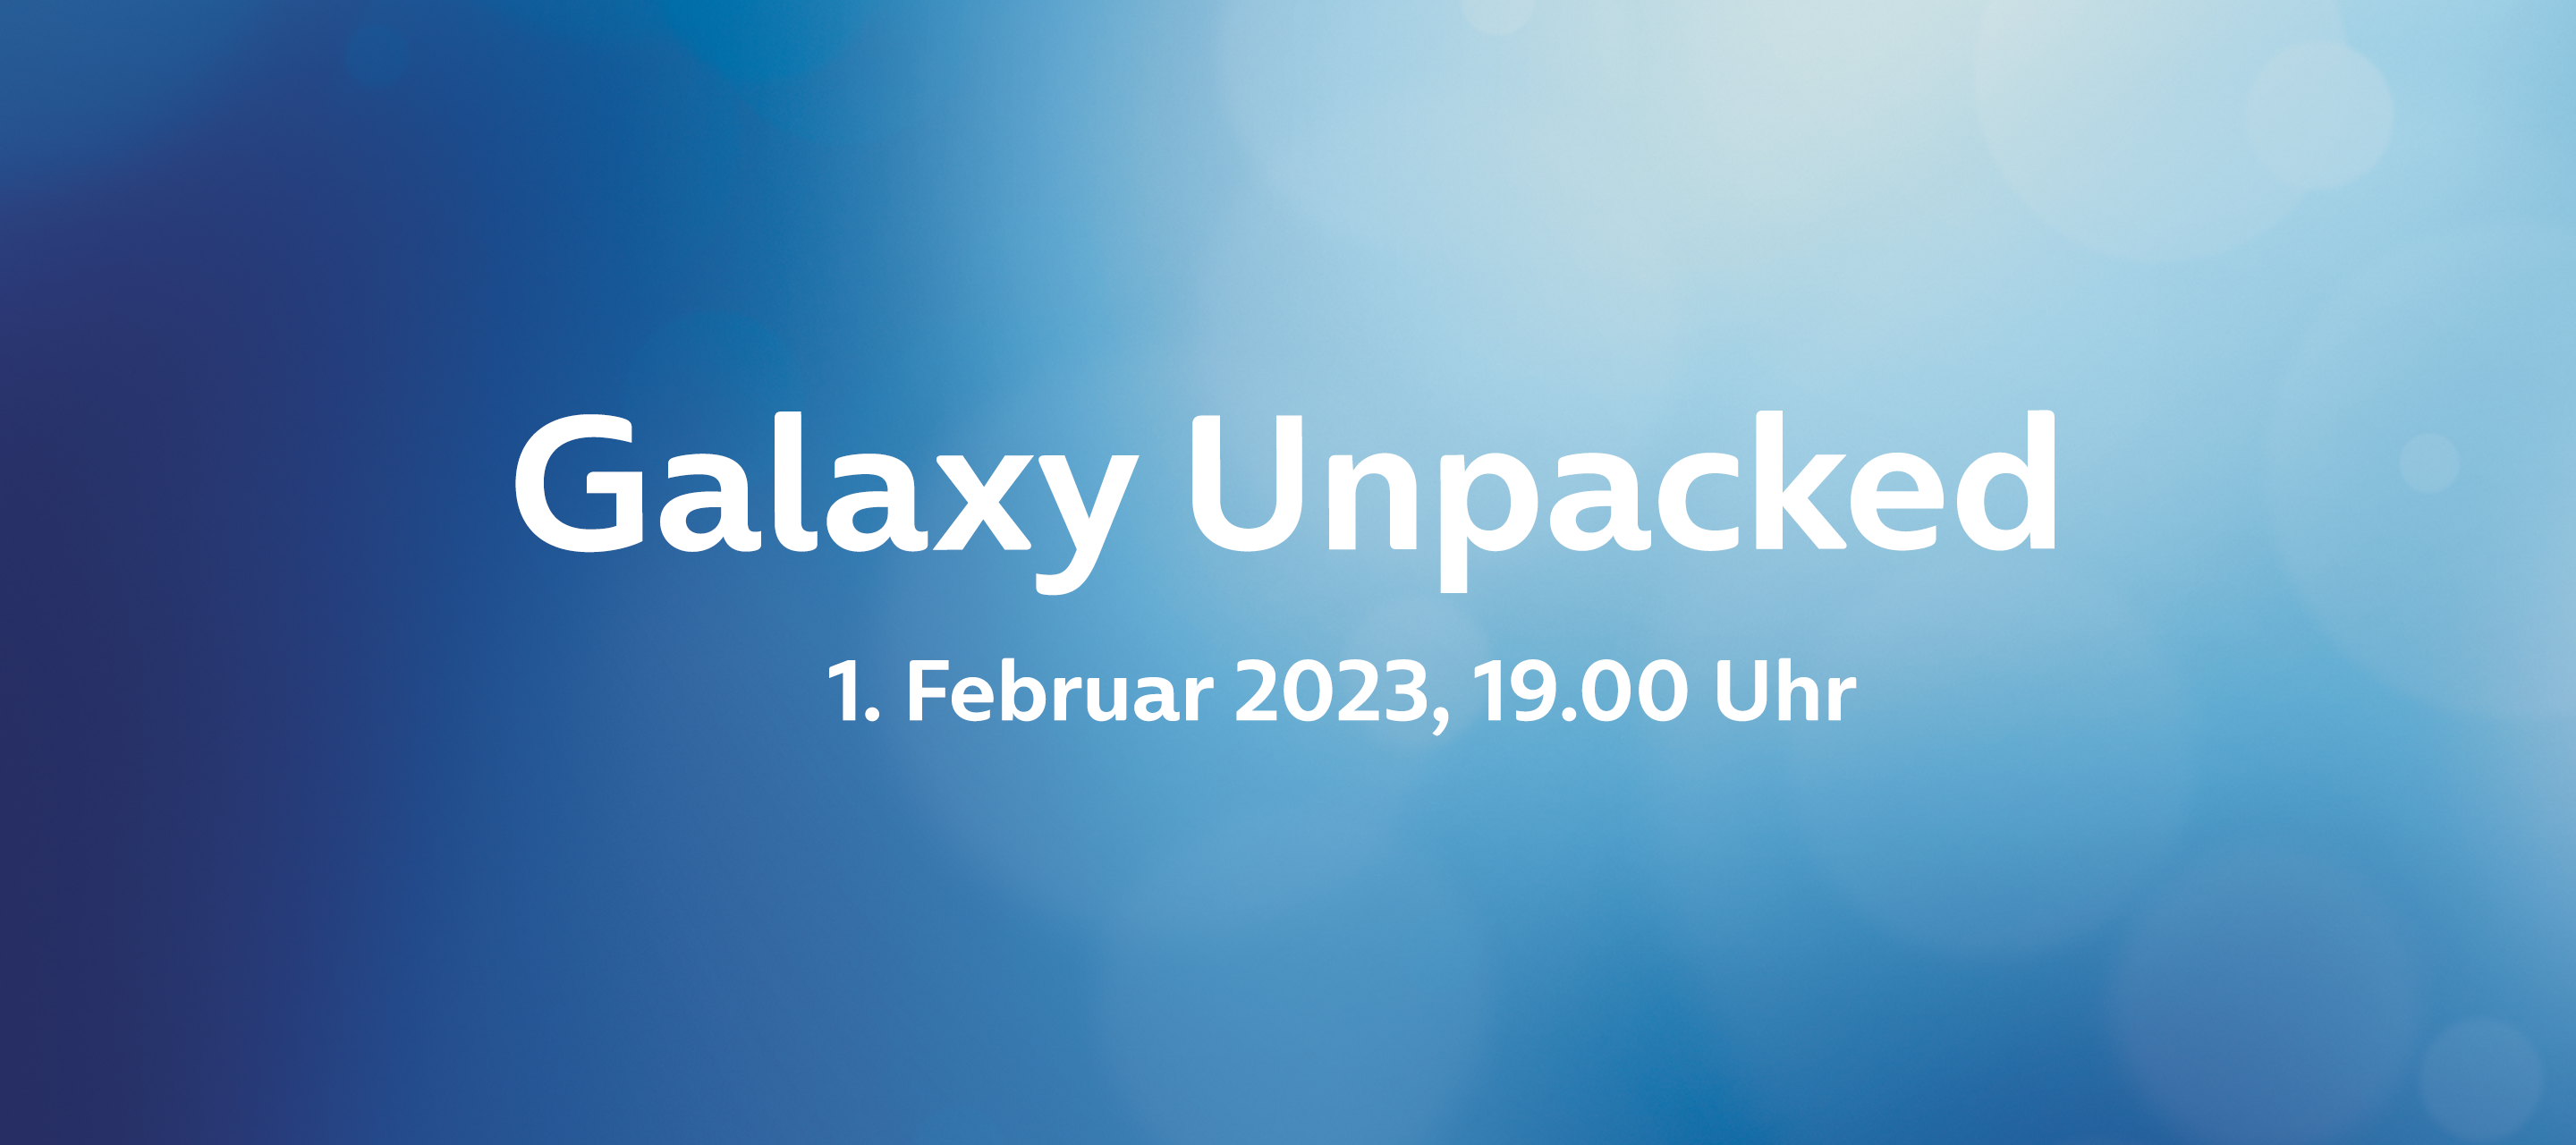 Live im O₂ Studio Berlin - Das Galaxy Unpacked Event 2023